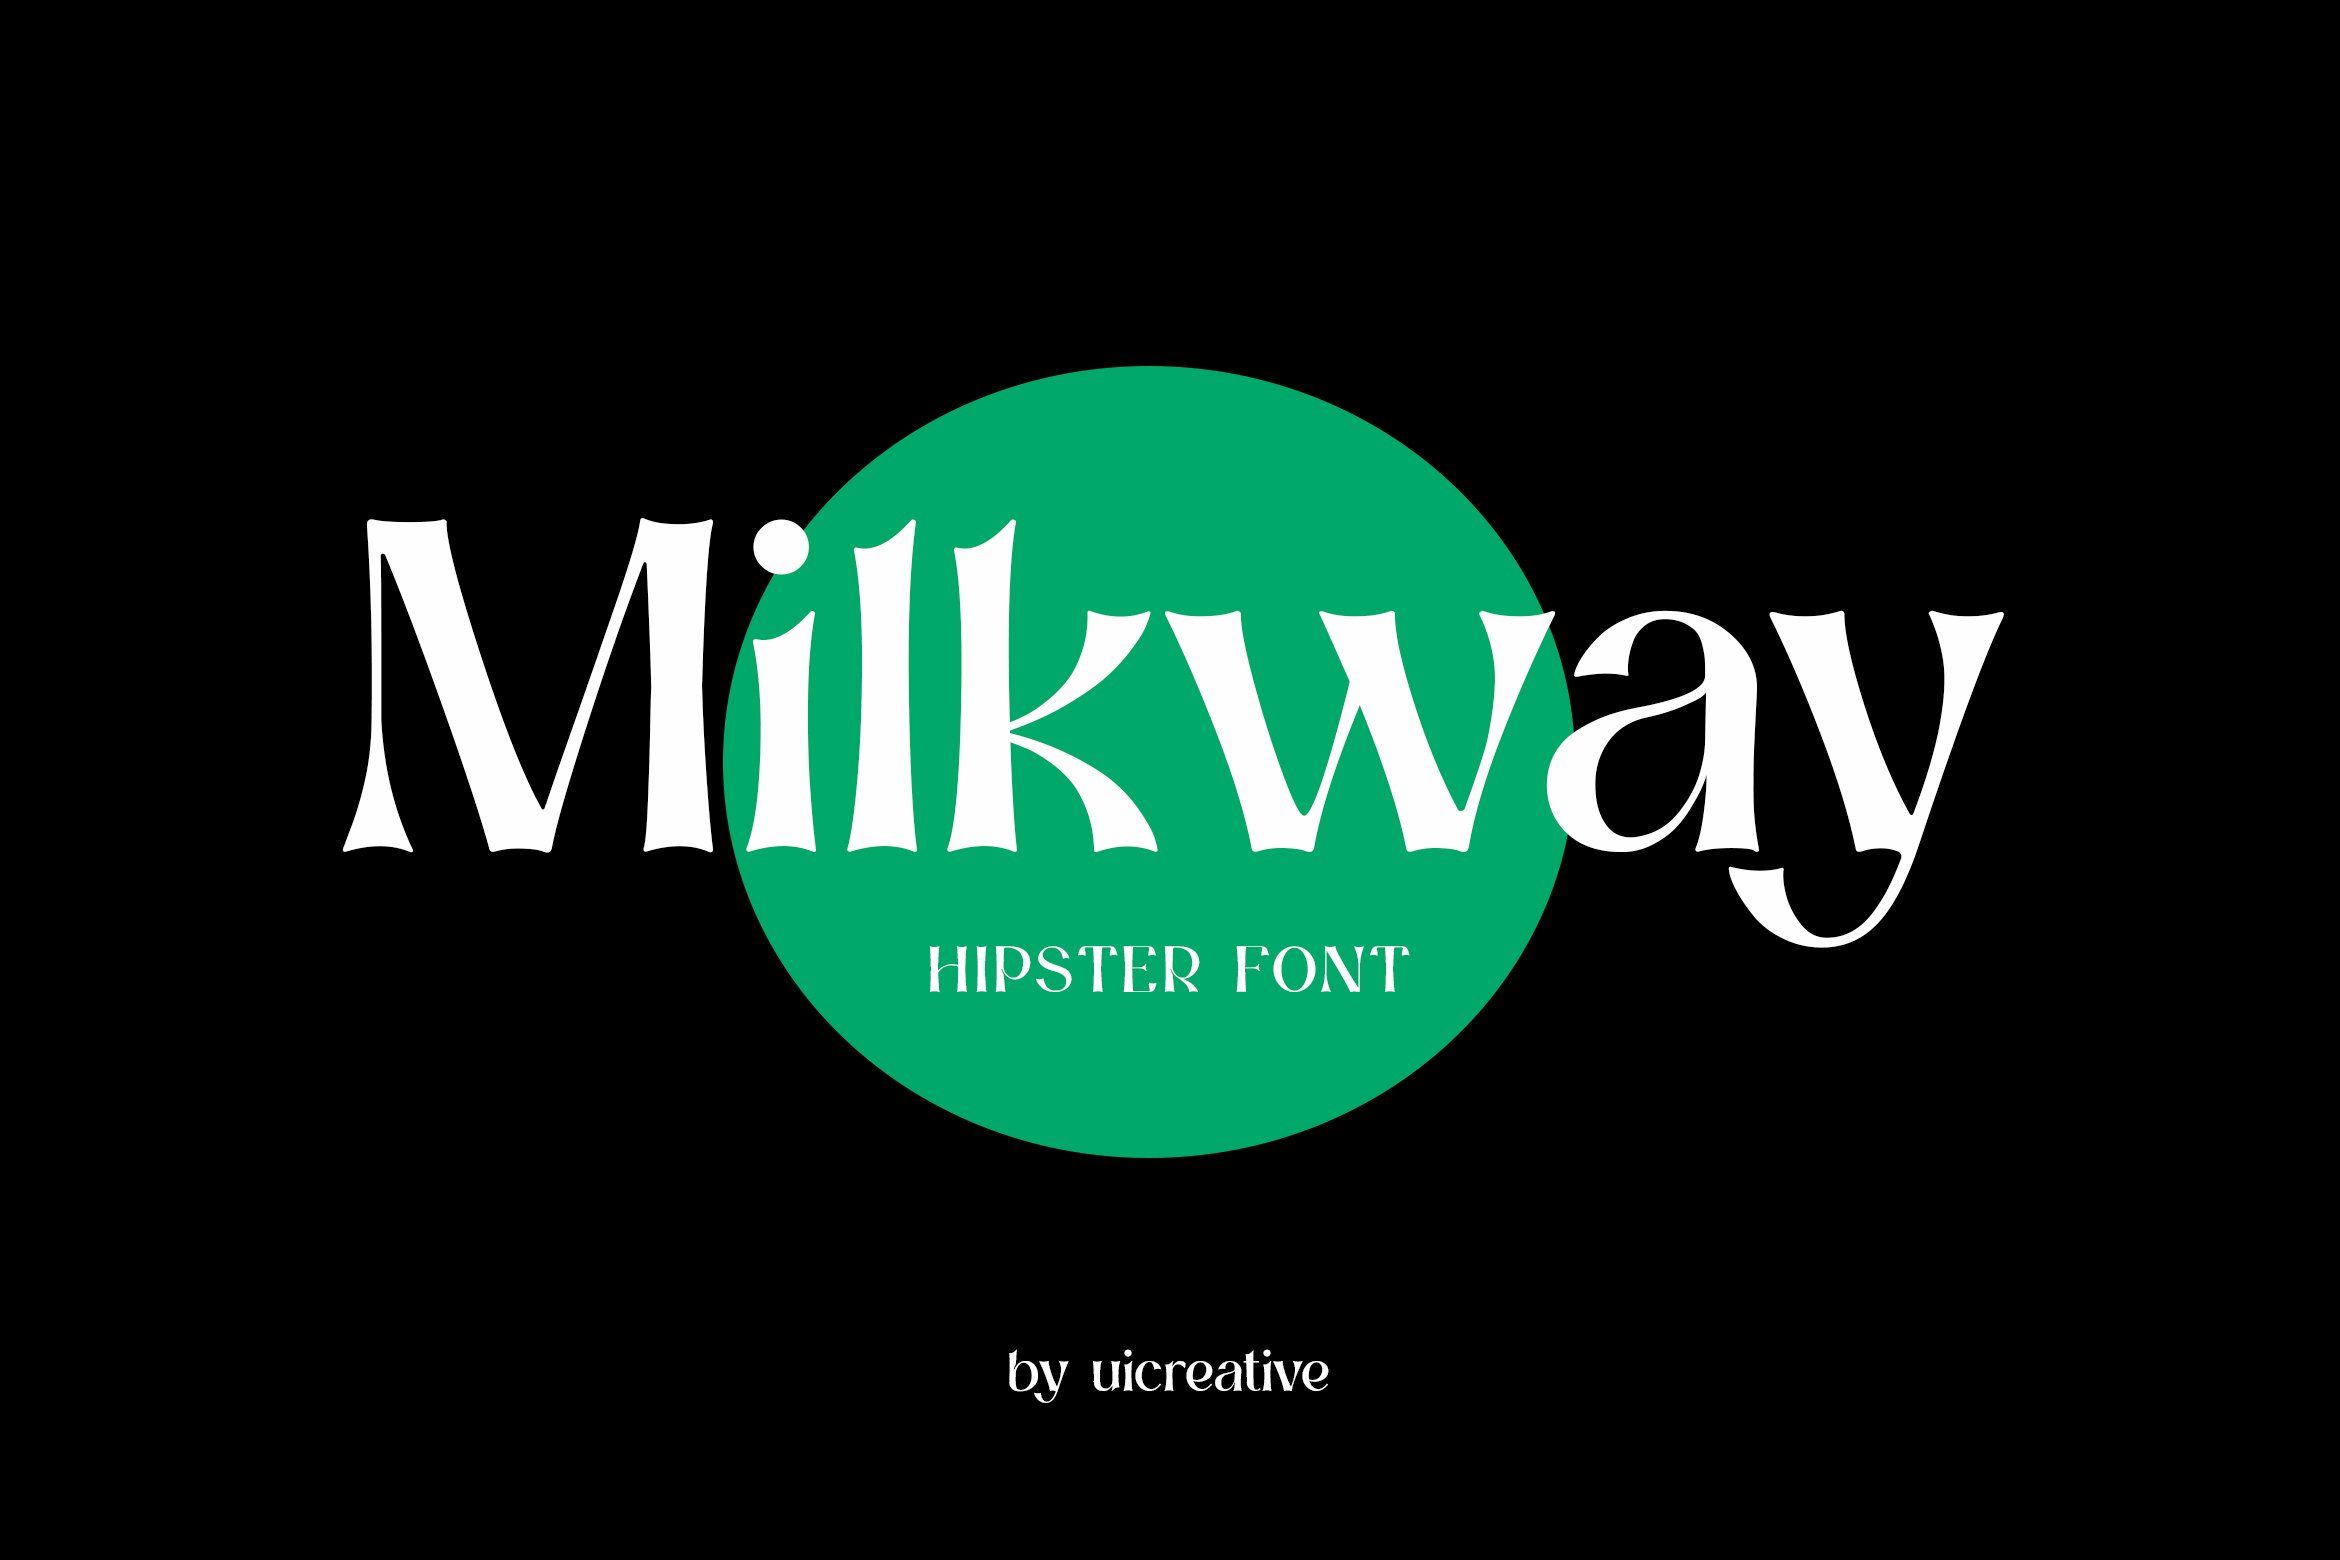 Milkway Hipster Sans Serif Font cover image.